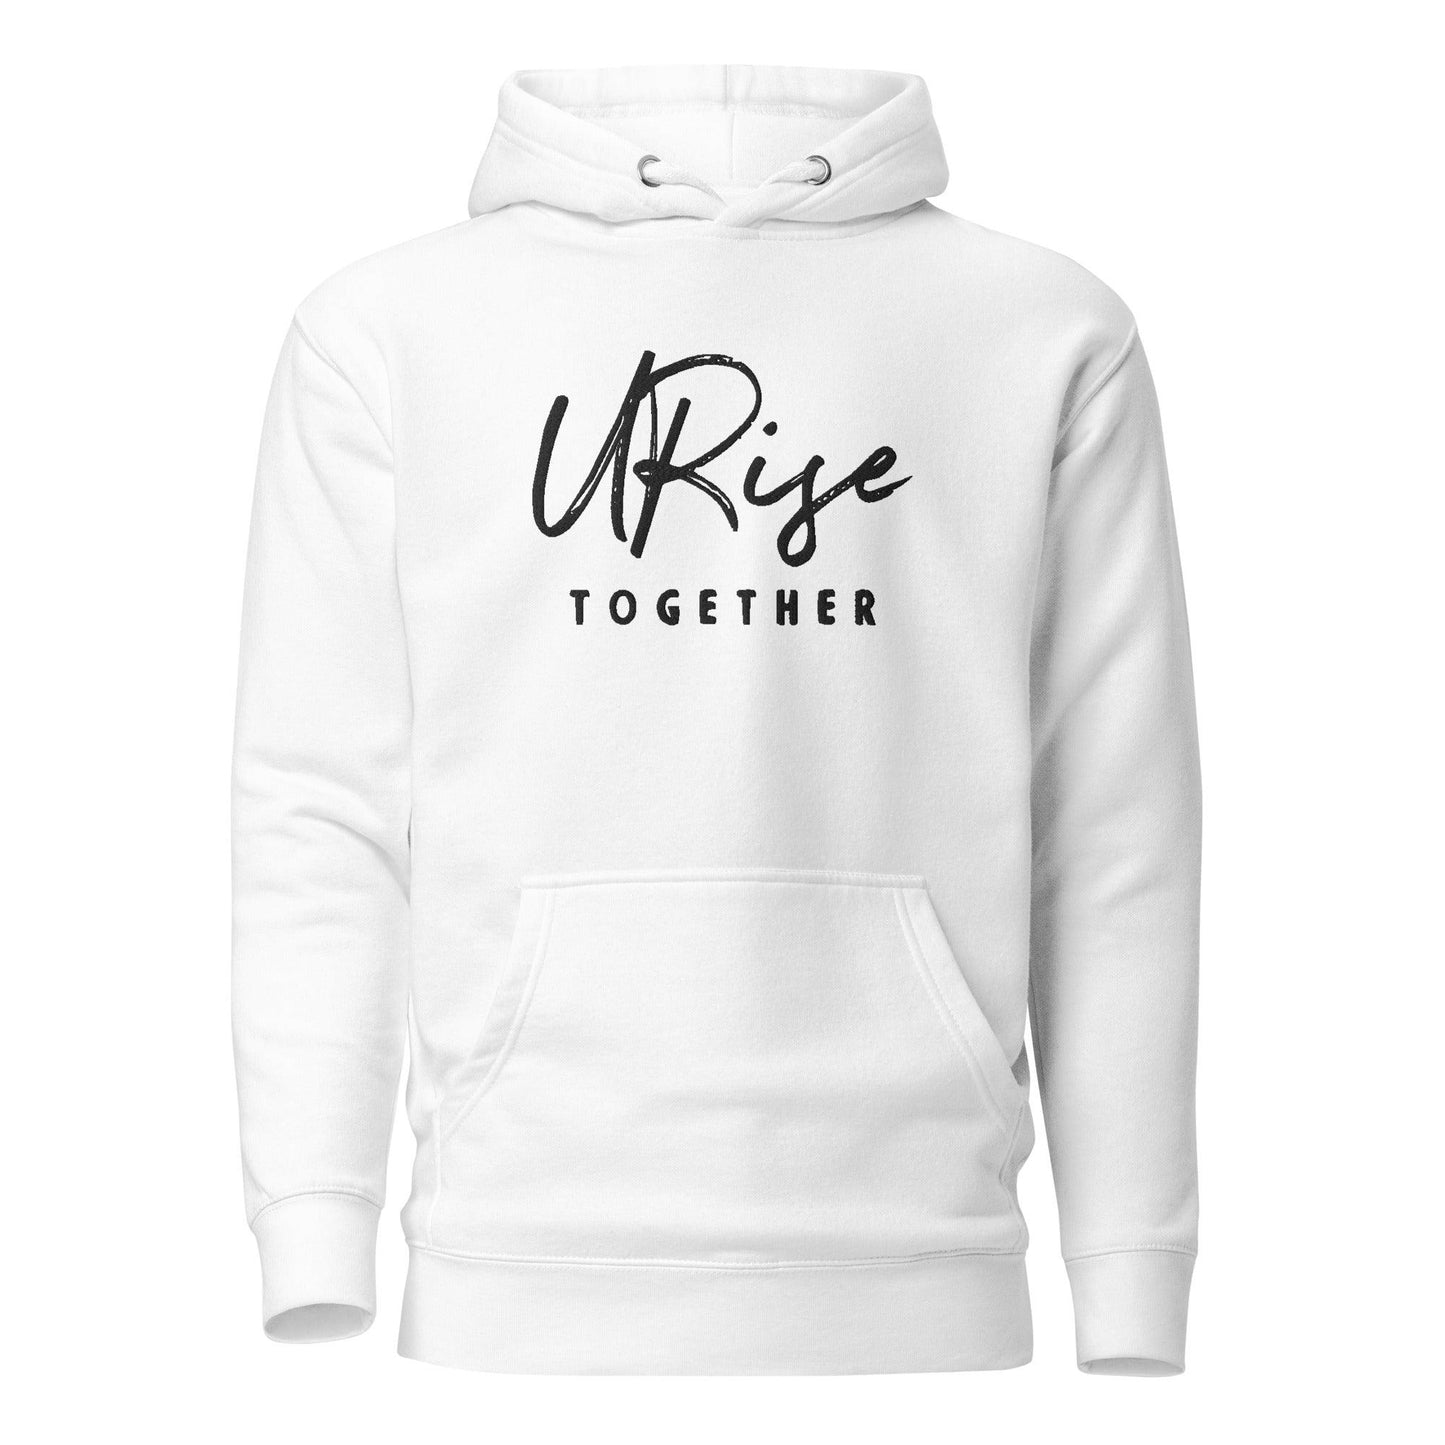 "URise Together" Embroidered logo Hoodie - White - URiseTogetherApparel